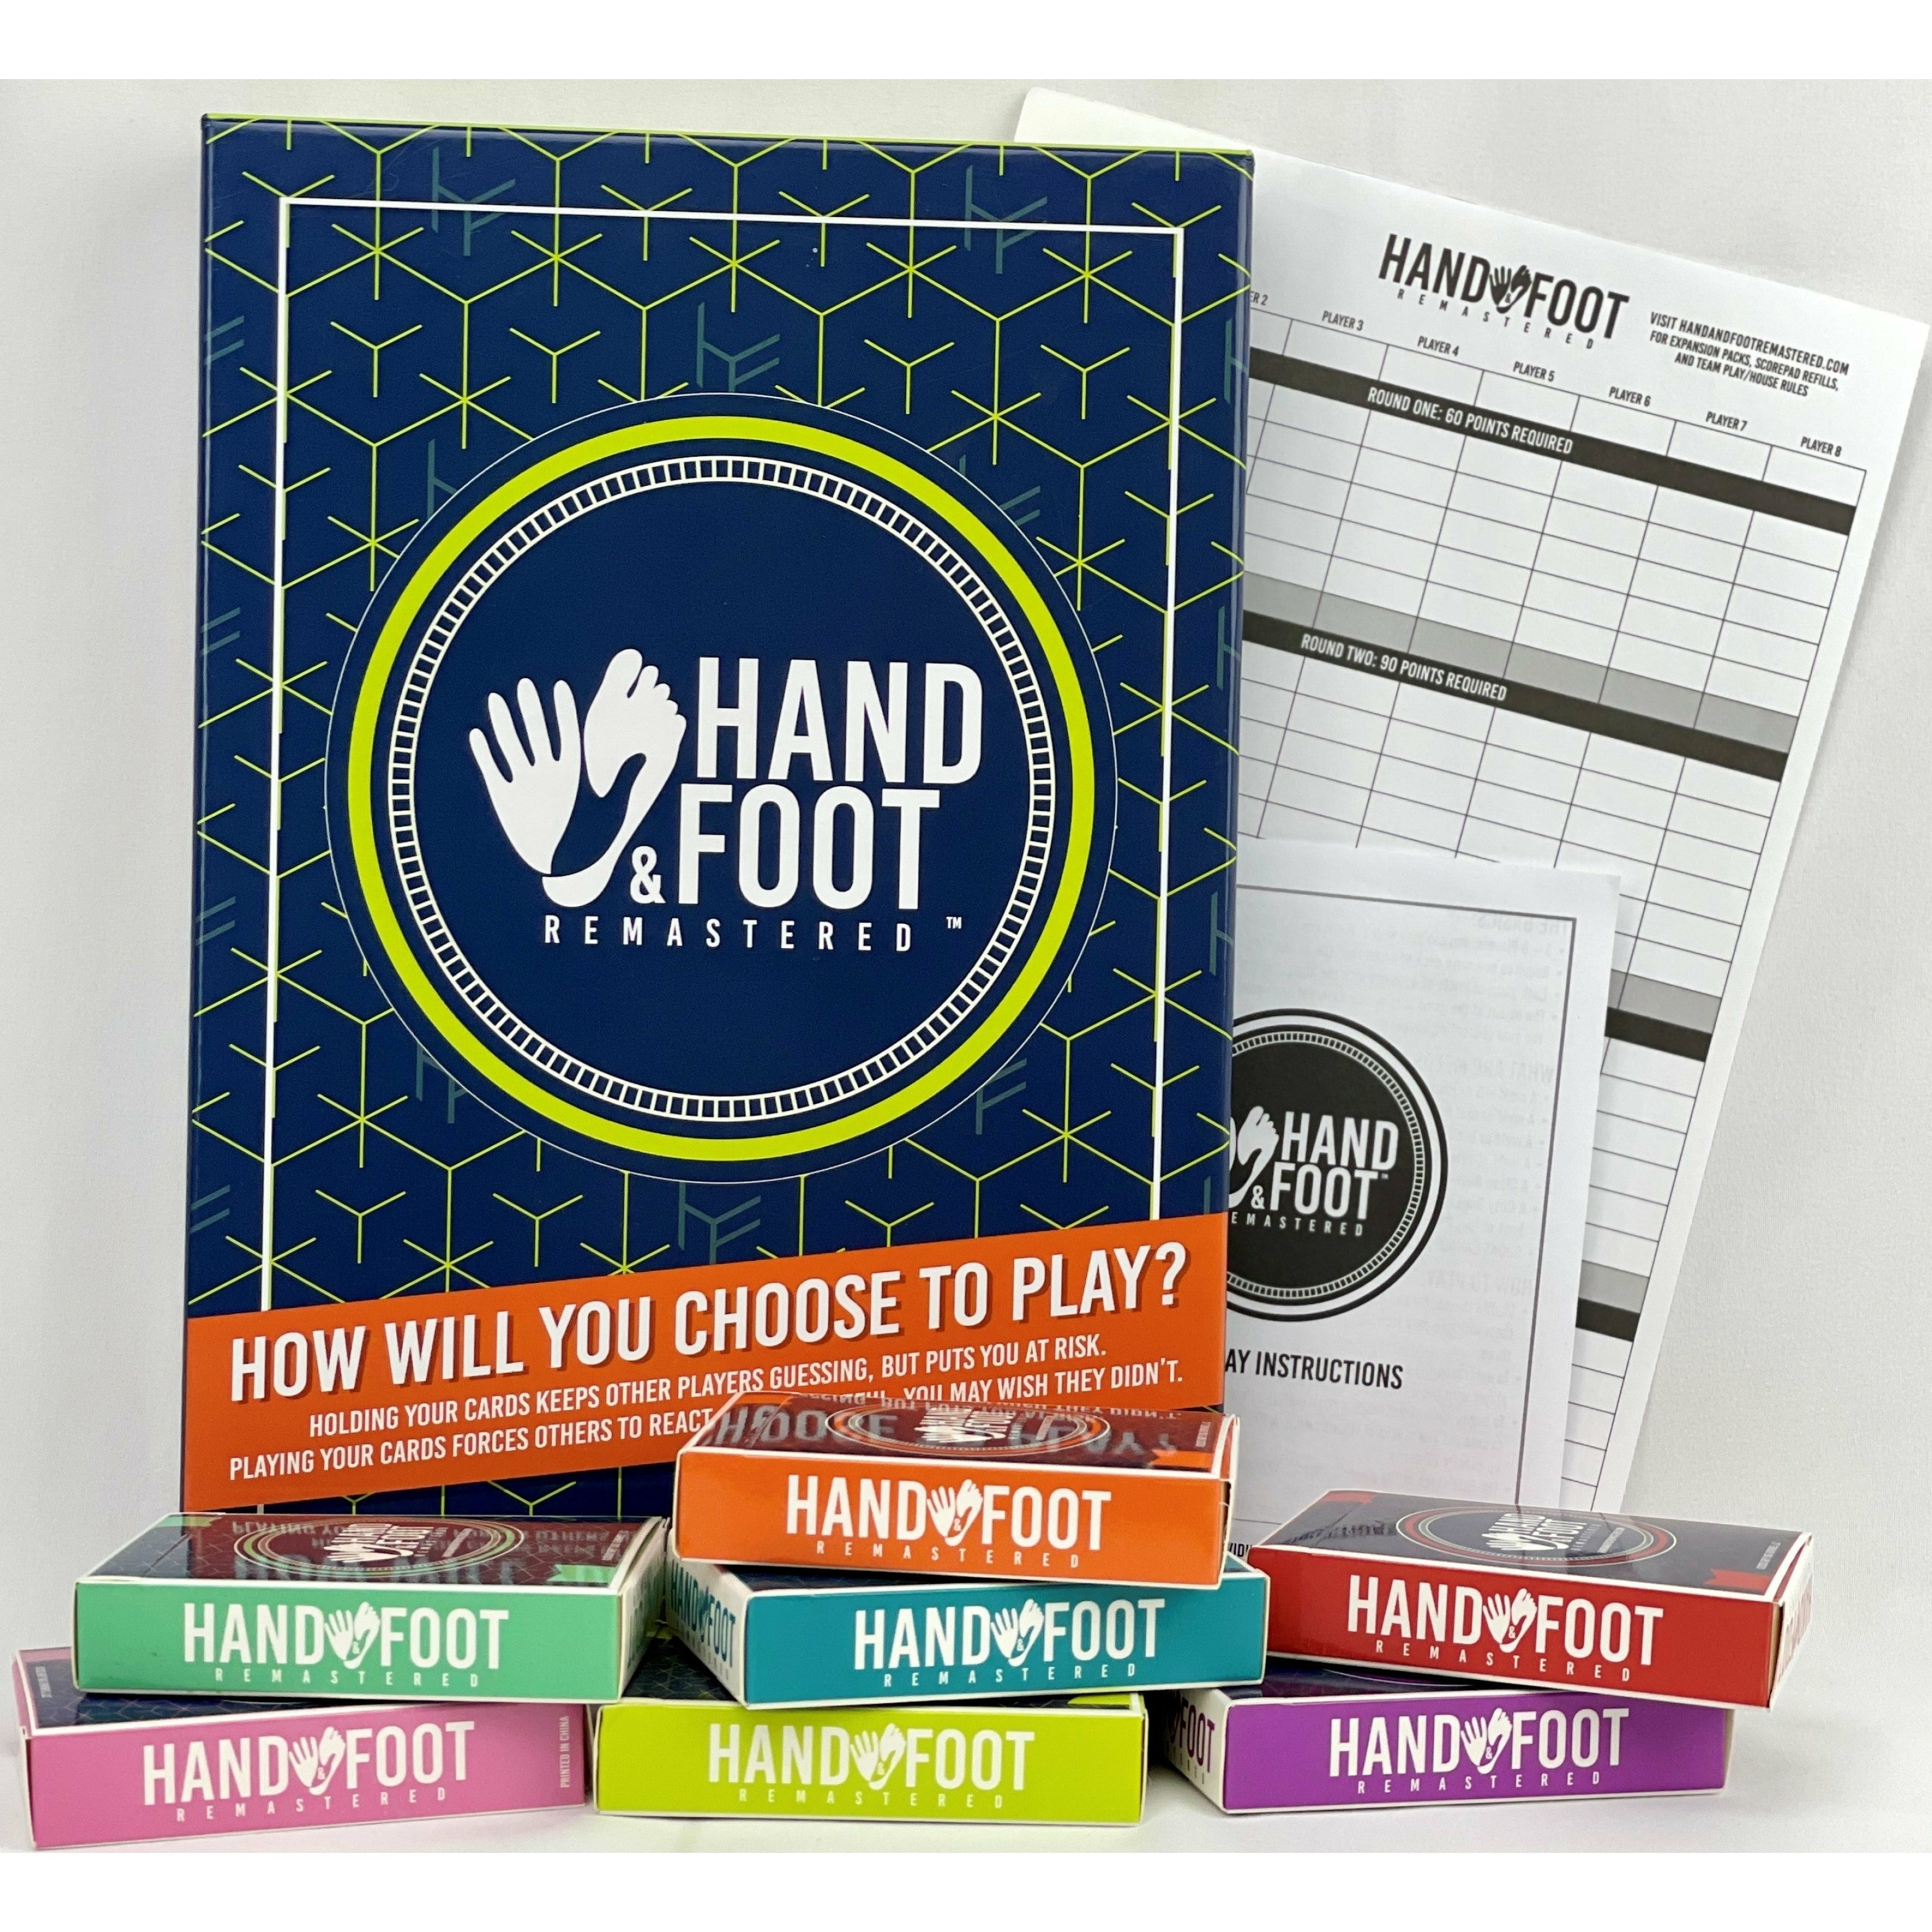 hand & foot remastered 8 player edition - original finish